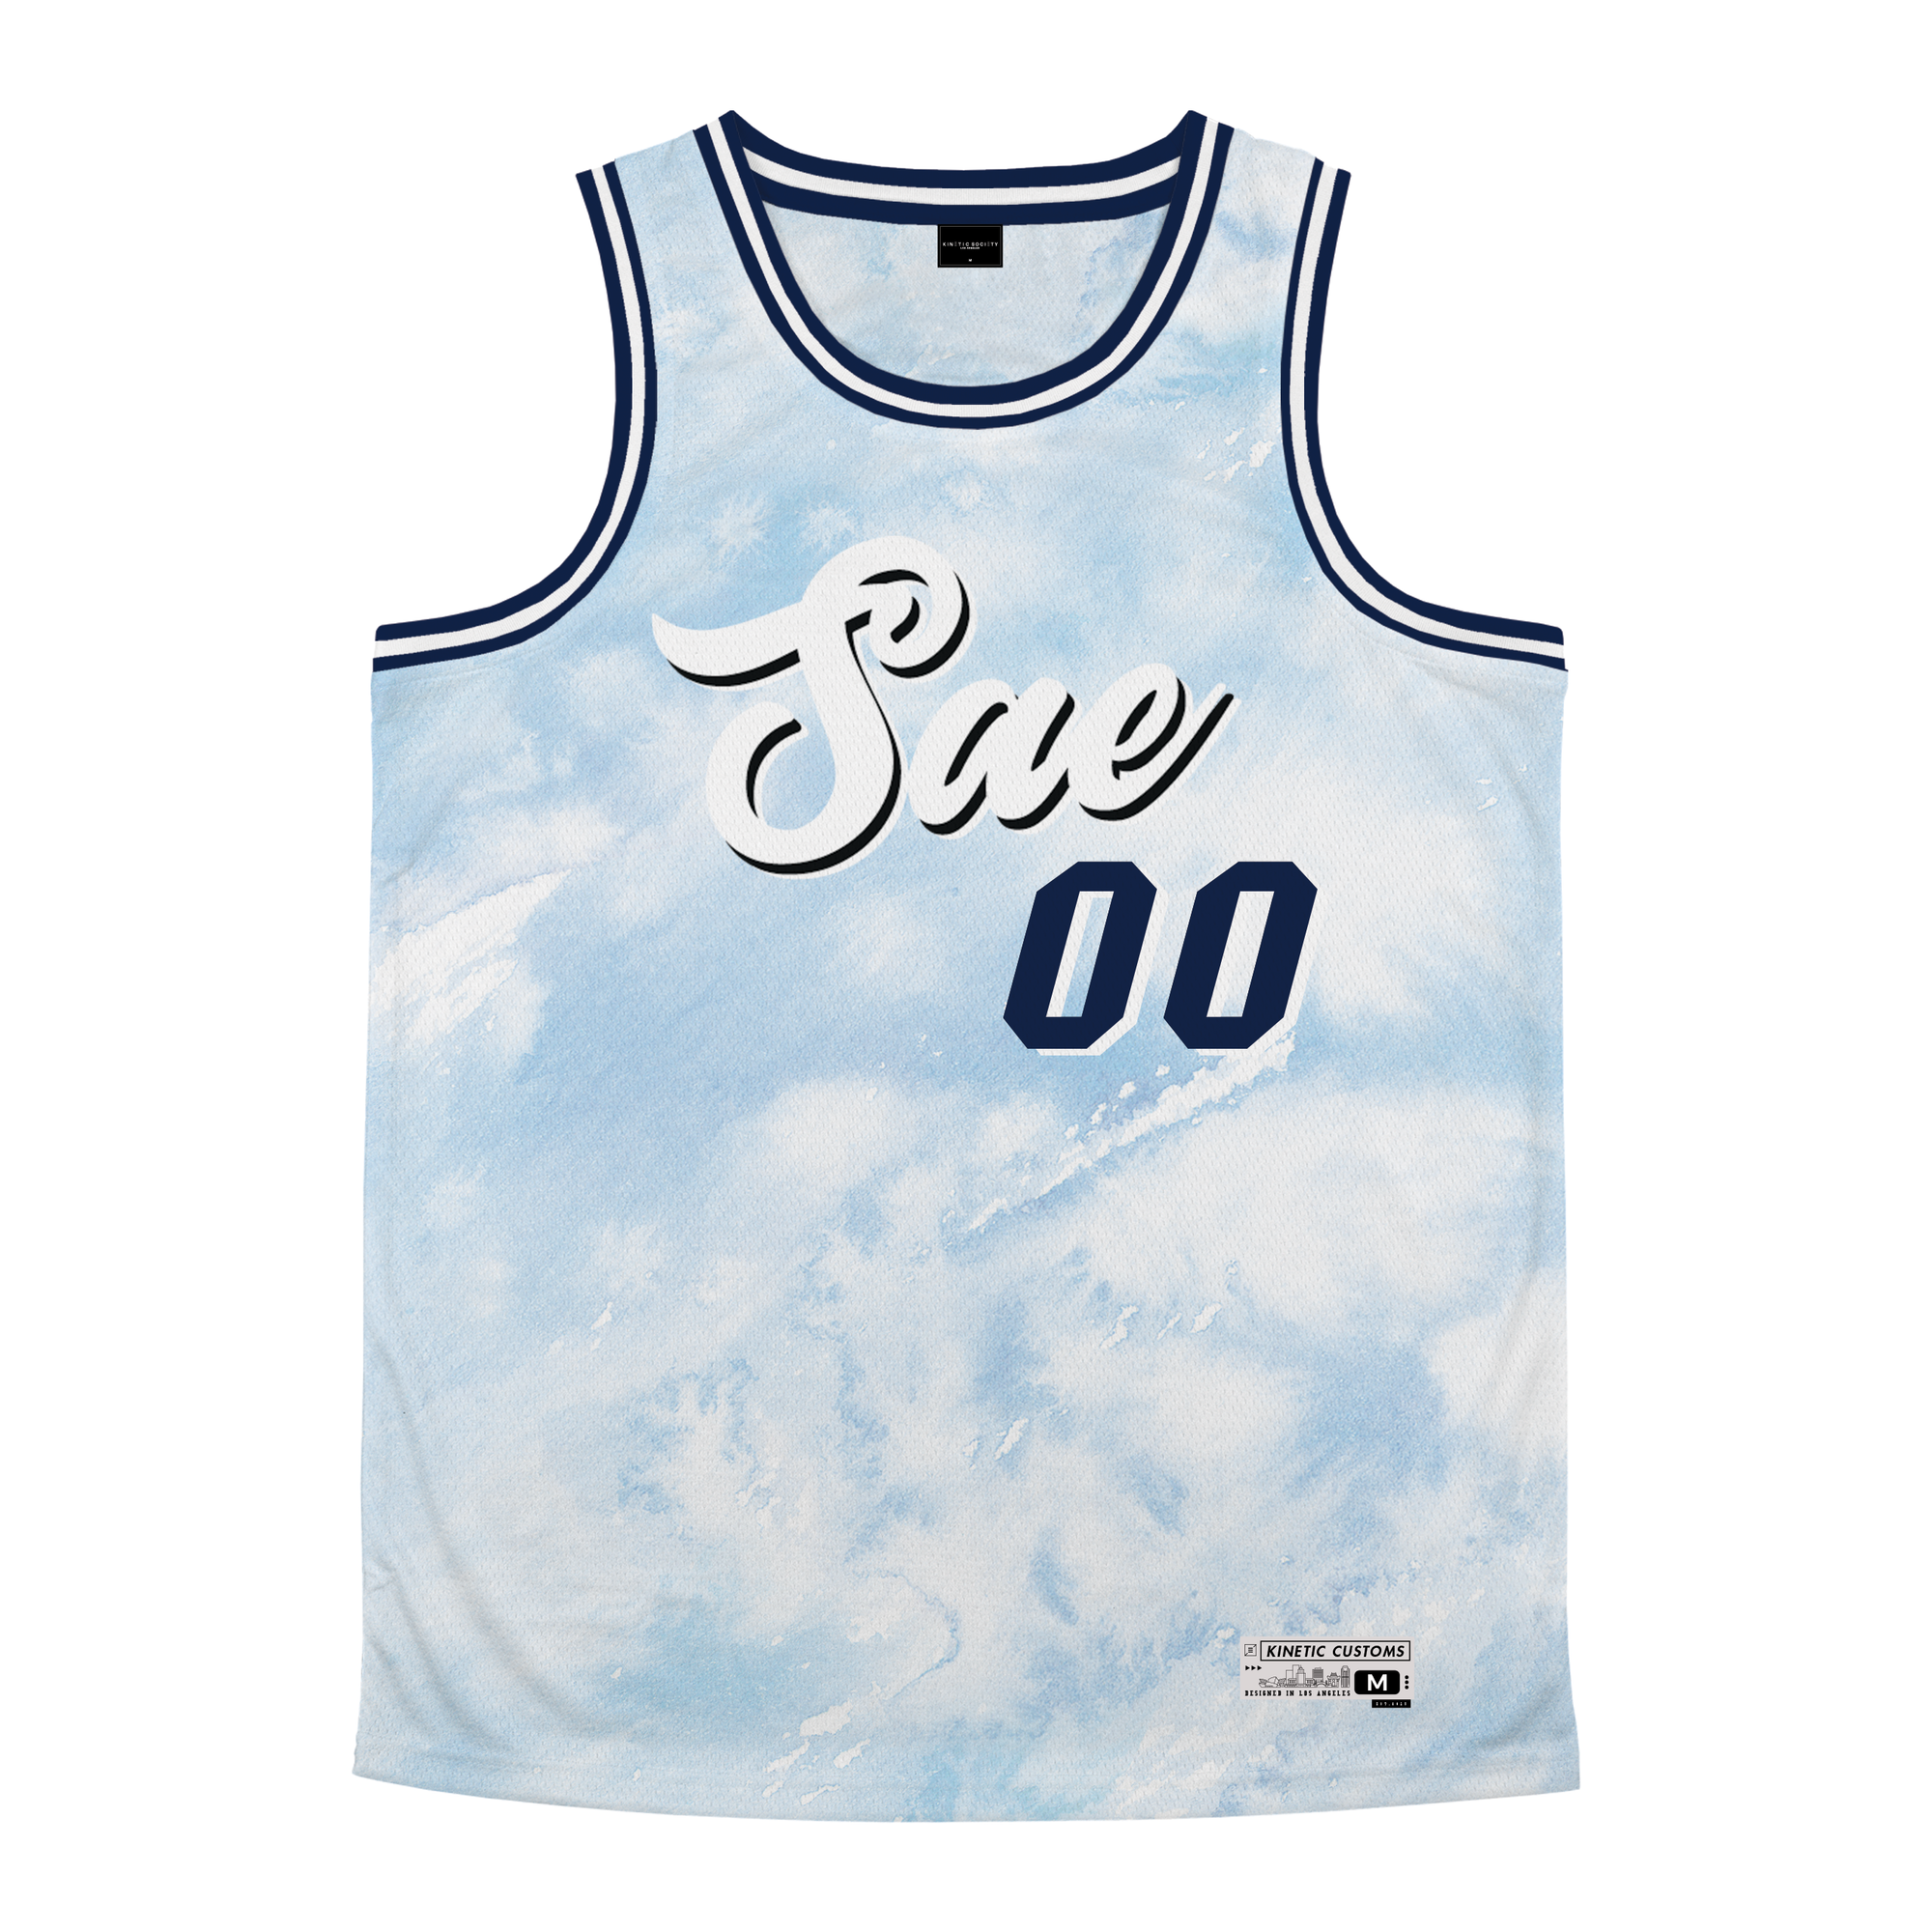 Sigma Alpha Epsilon - Blue Sky Basketball Jersey